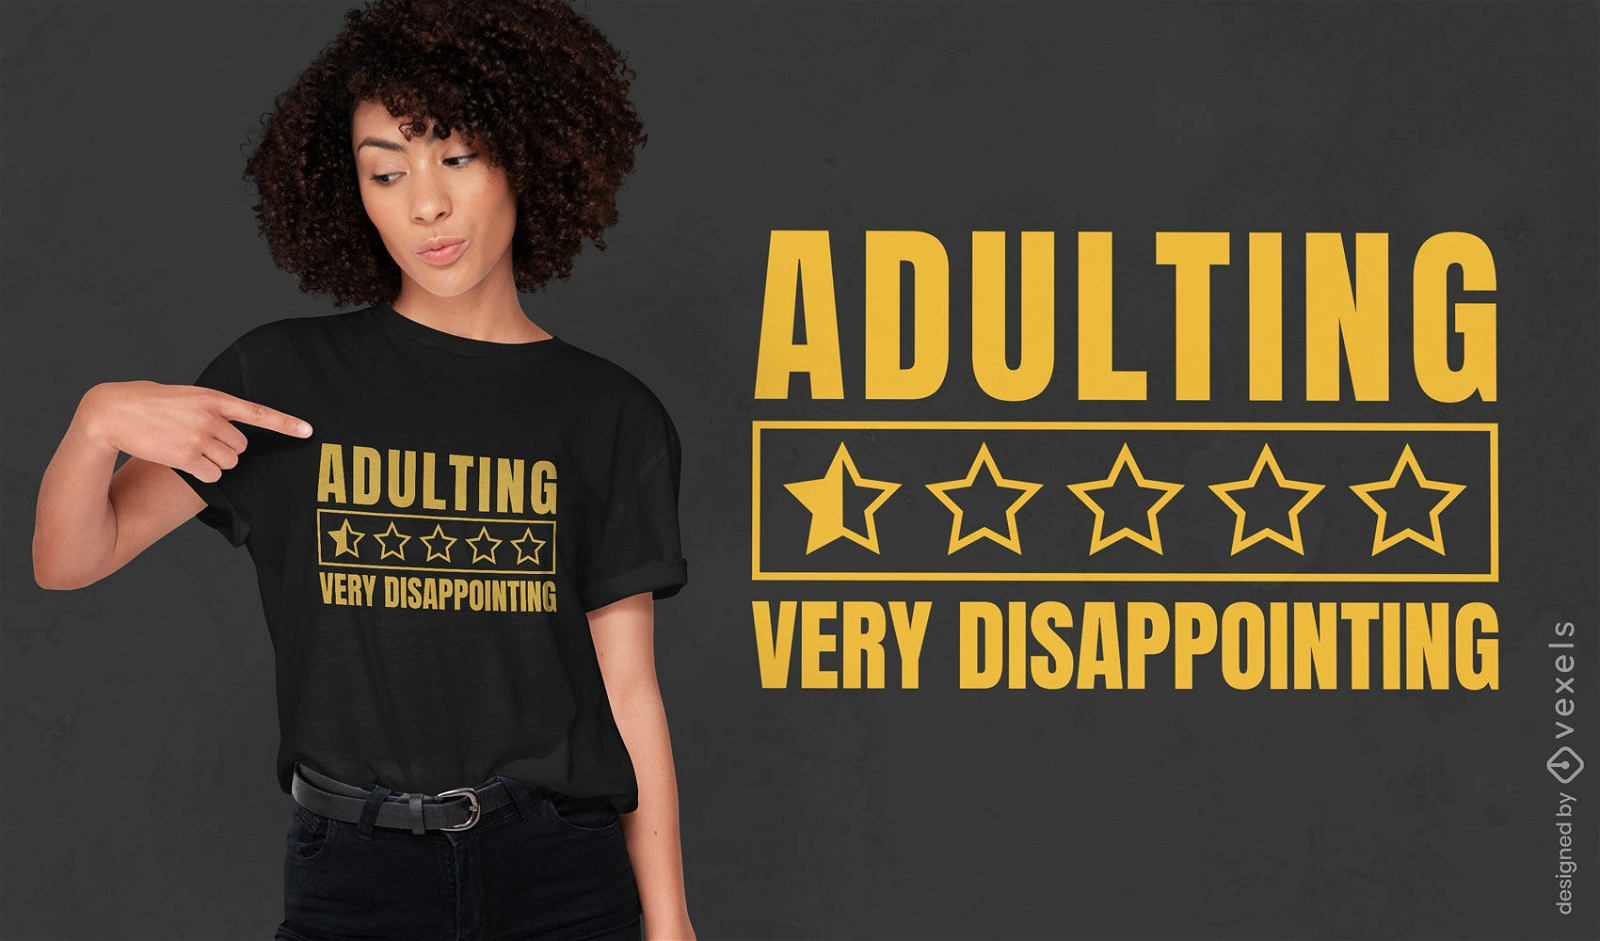 Funny adulthood quote joke t-shirt design